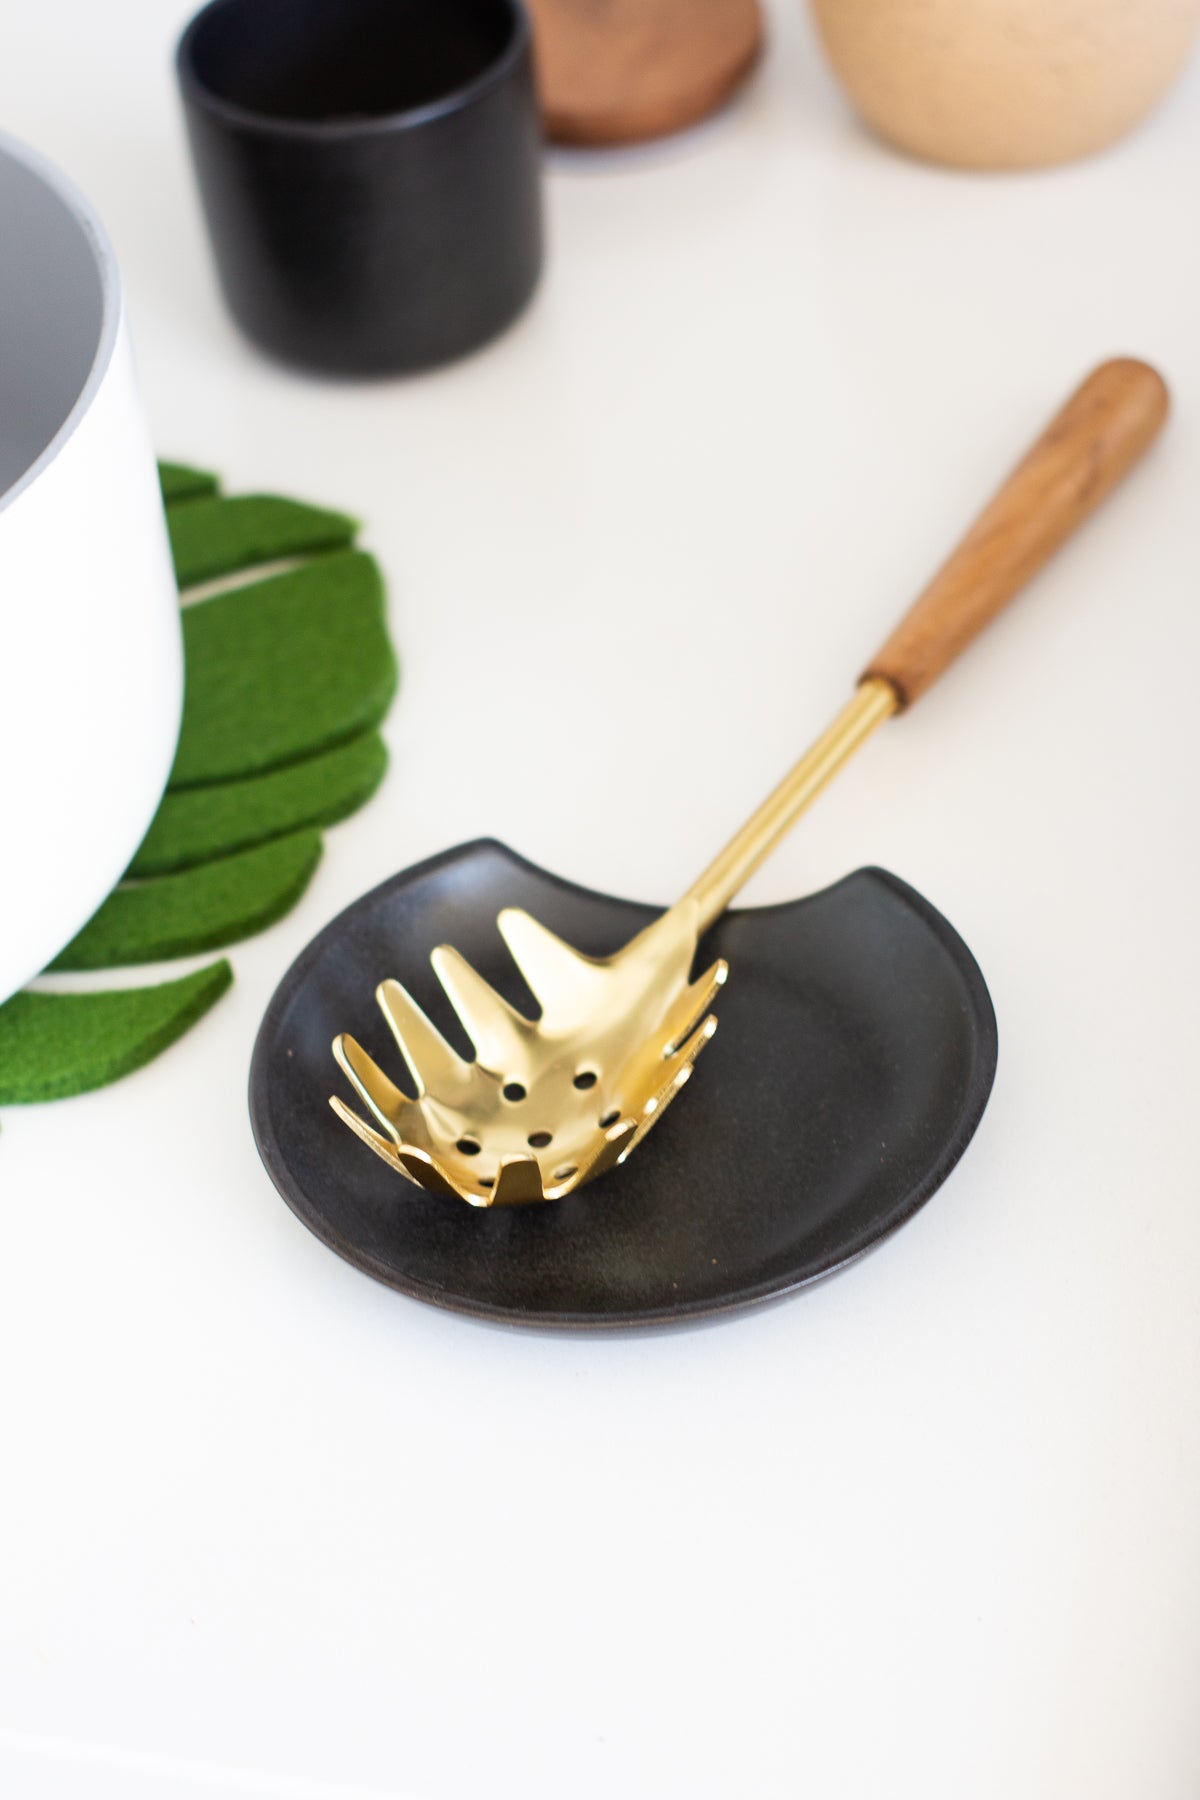 Ceramic Spoon Rest Made to Order — RachaelPots